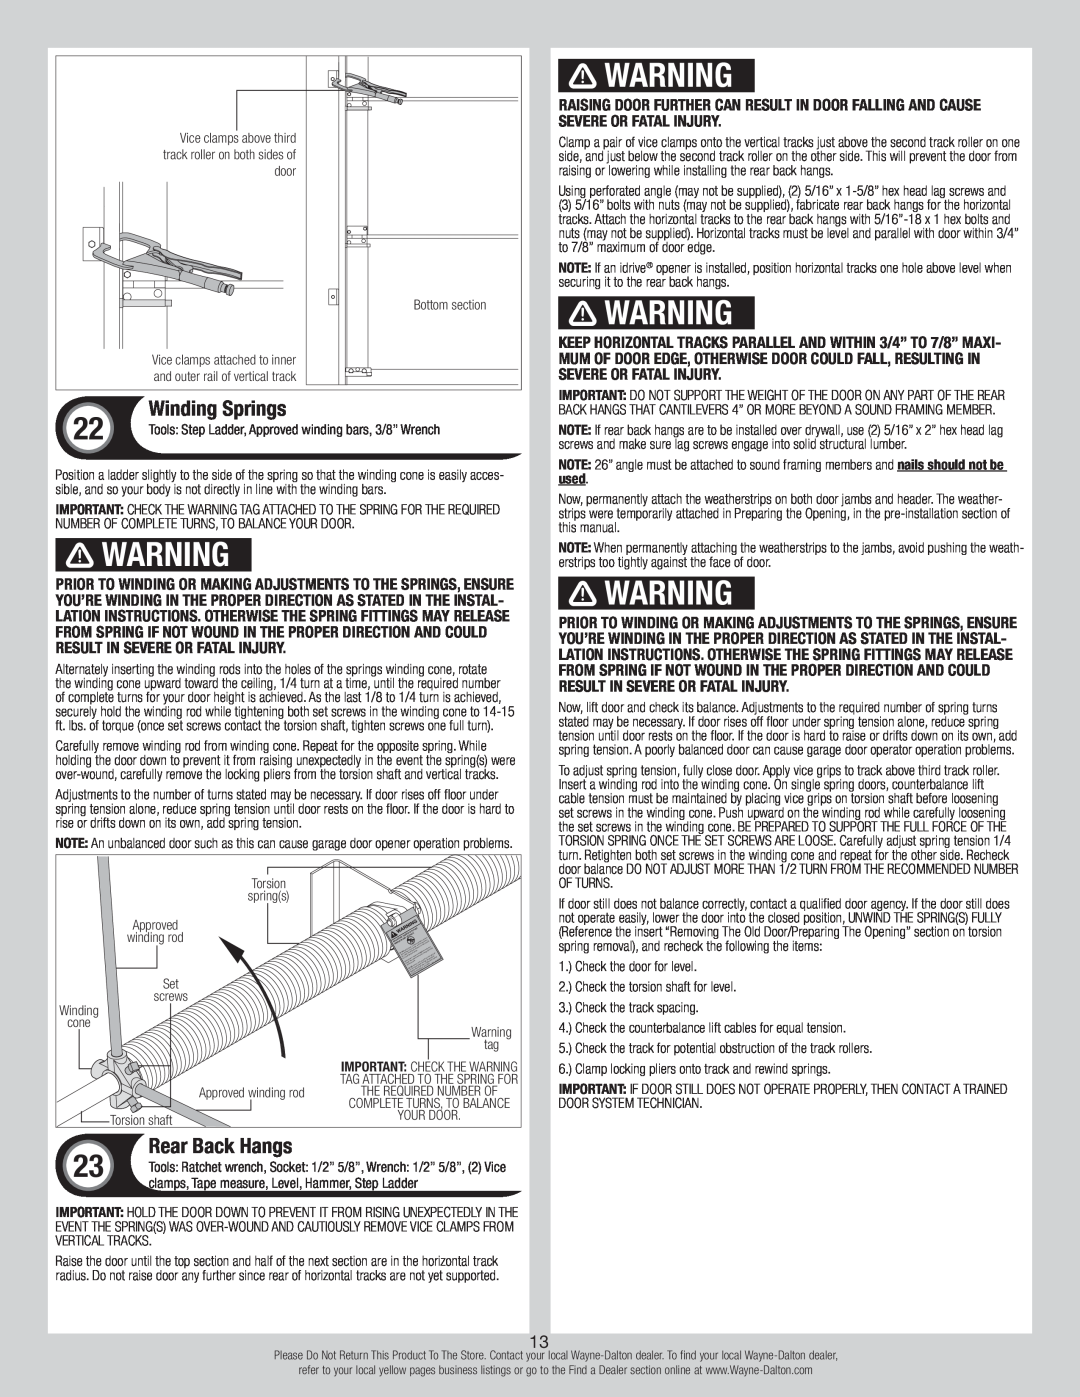 Wayne-Dalton 8300/8500 installation instructions Winding Springs, Rear Back Hangs 